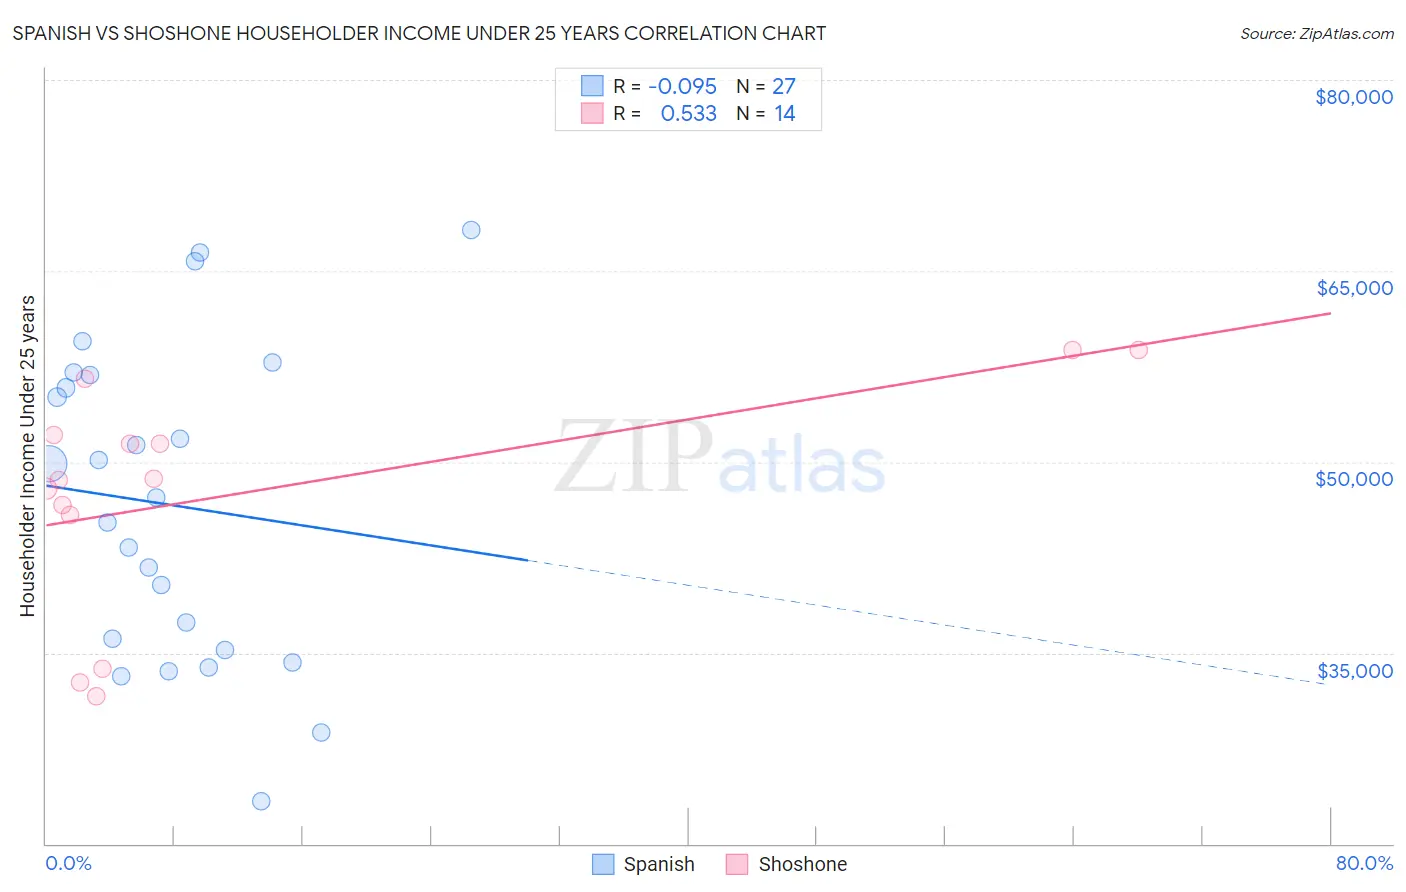 Spanish vs Shoshone Householder Income Under 25 years